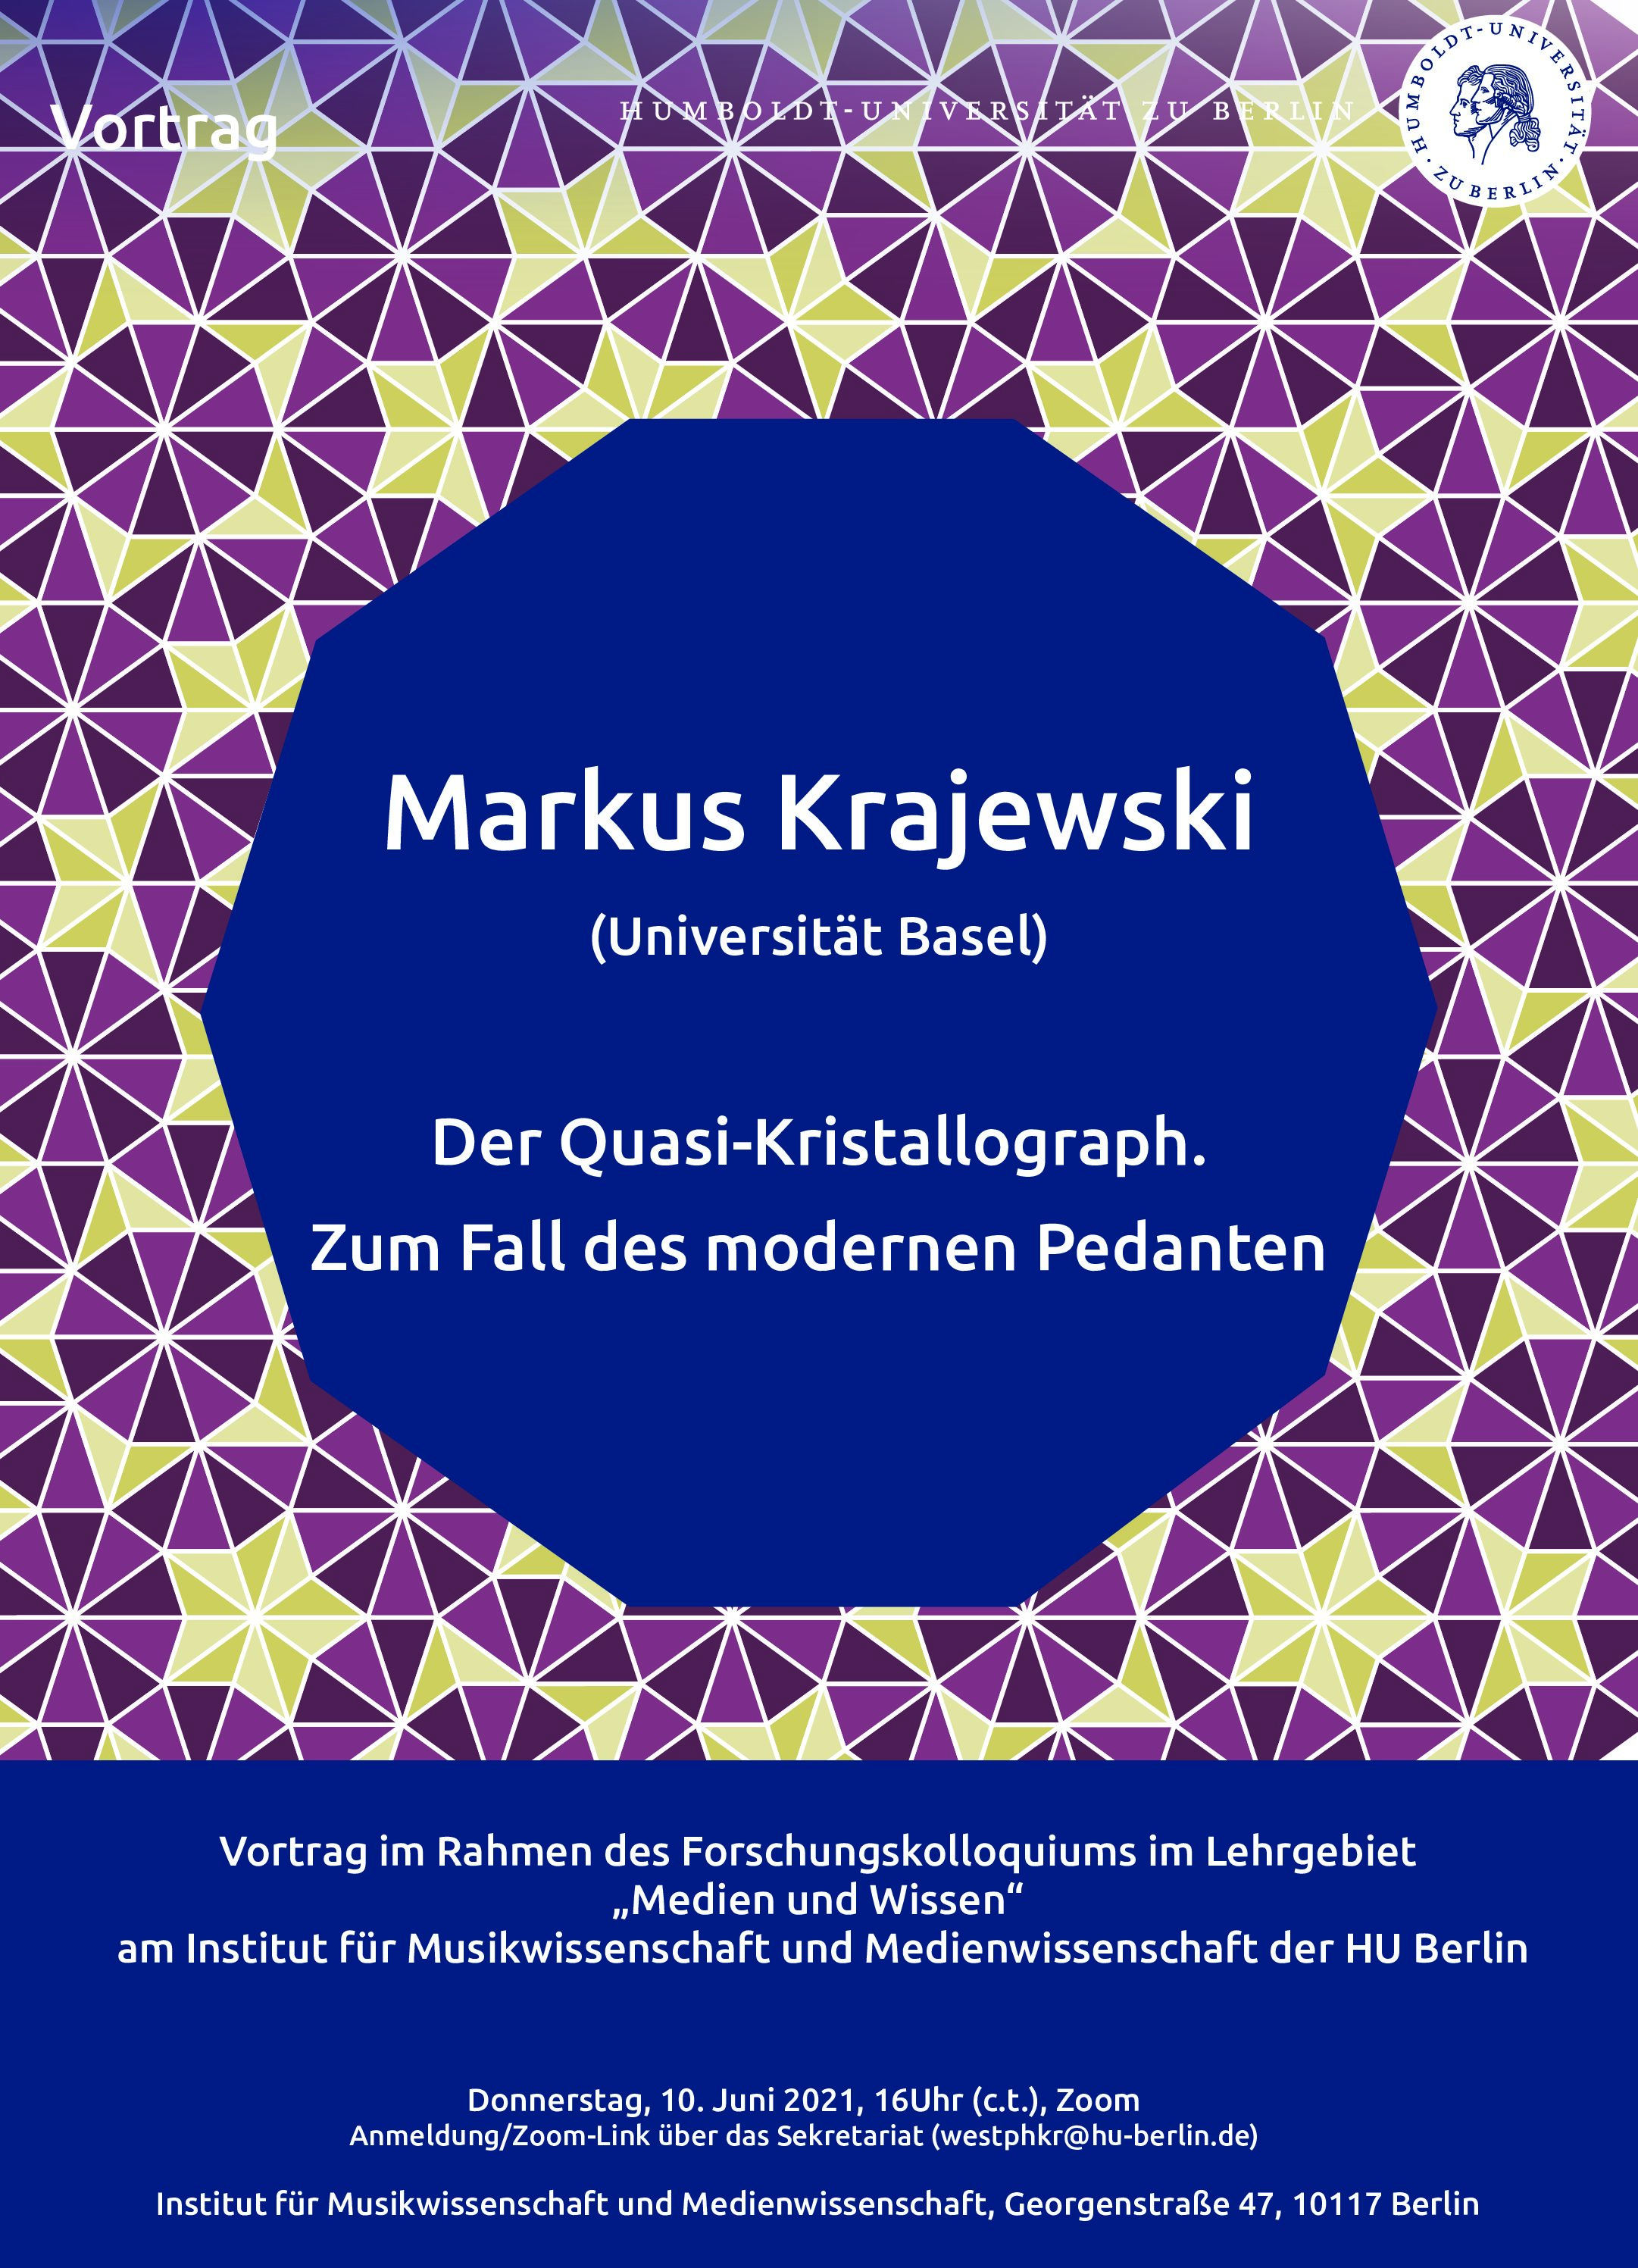 Vortrag: Markus Krajewski (Universität Basel)